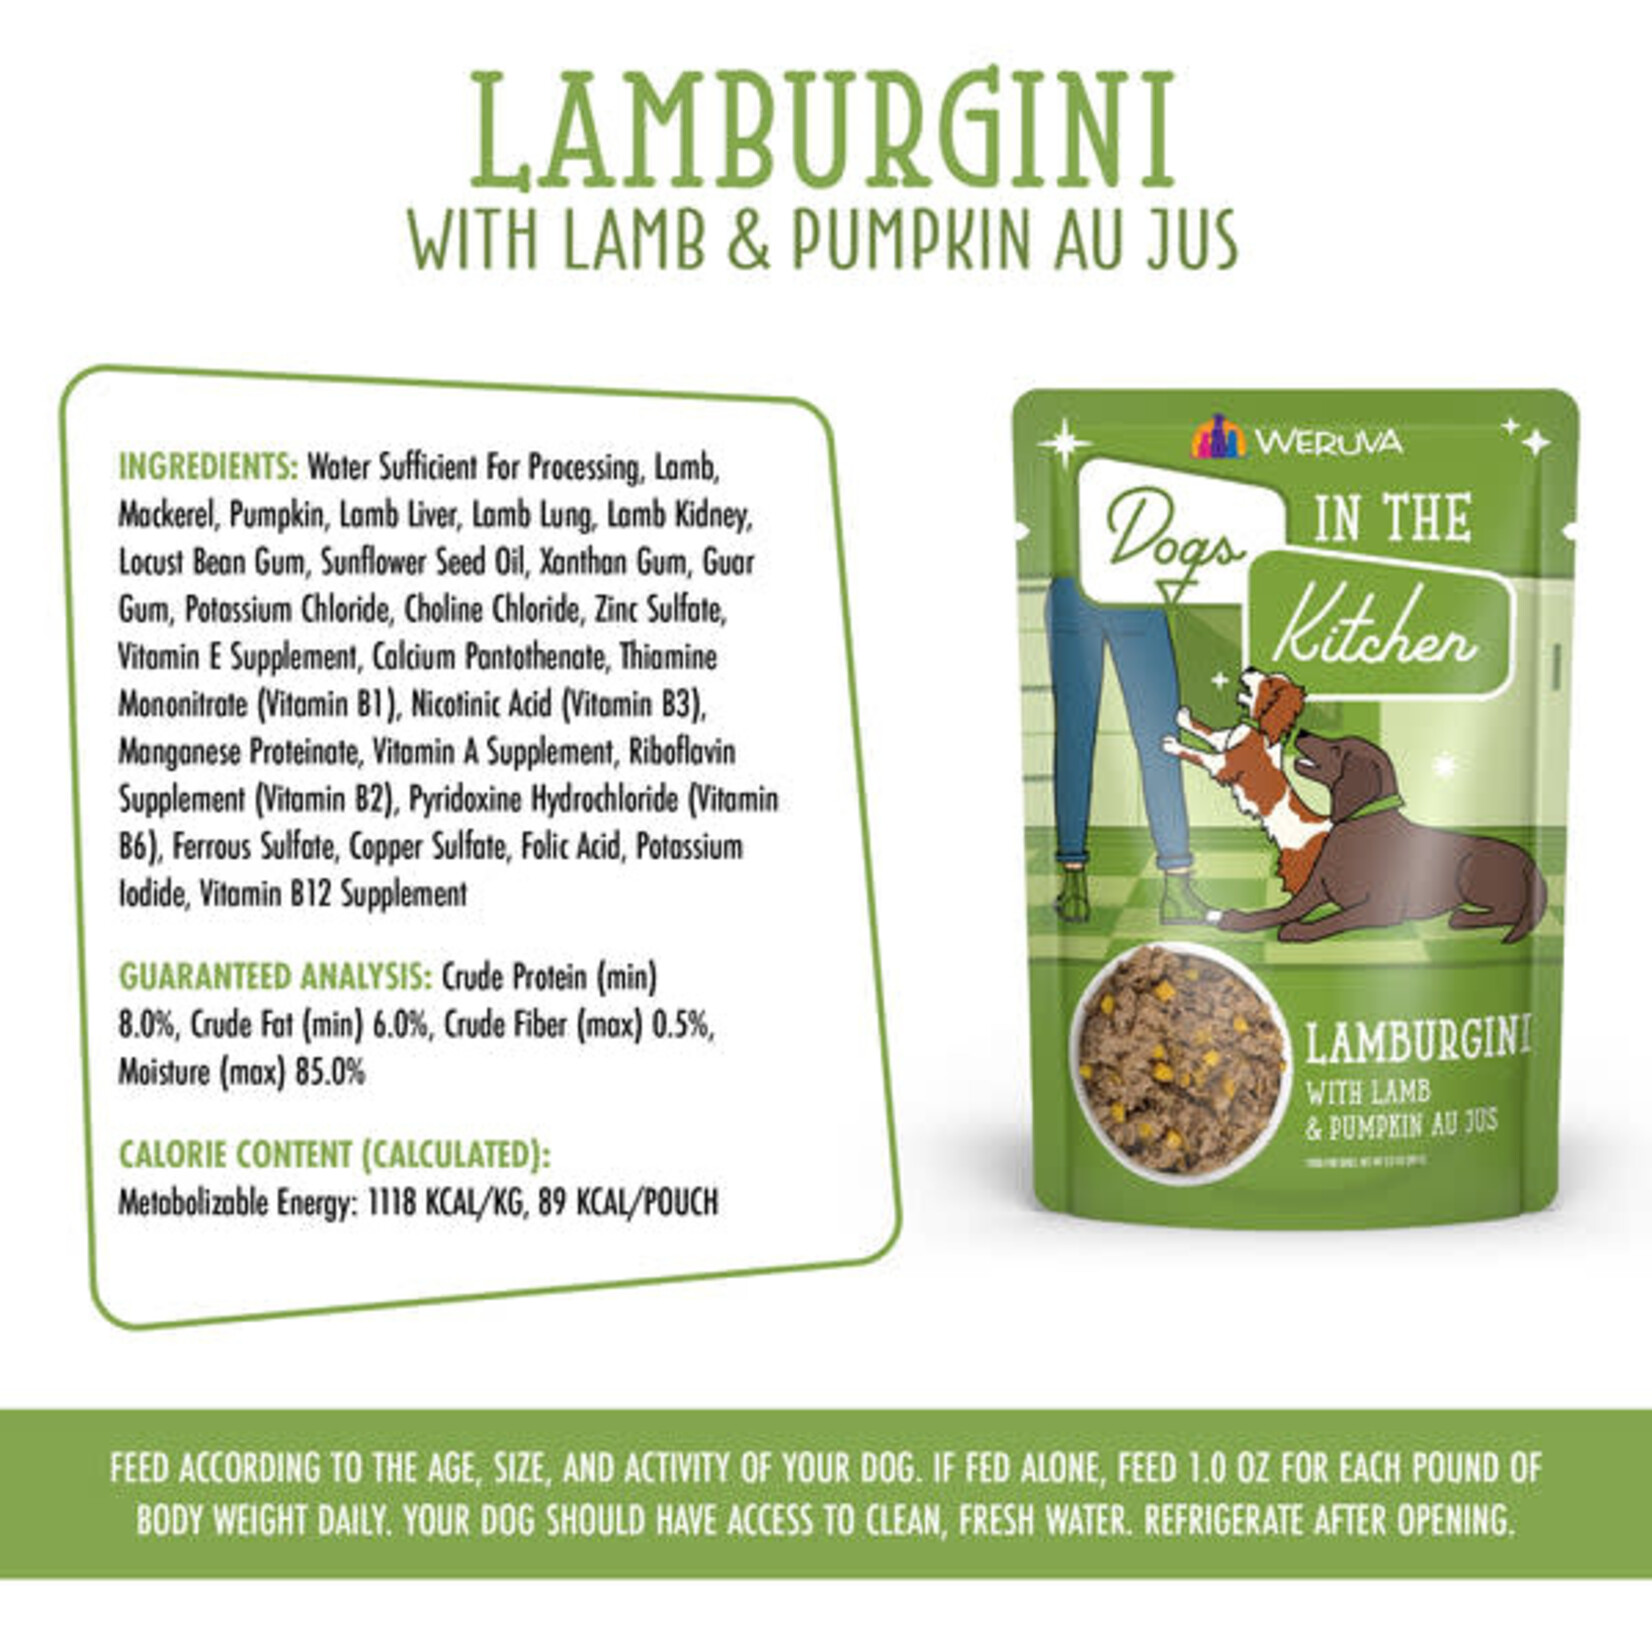 Weruva Dogs in the Kitchen - Lamburgini with Lamb & Pumpkin Au Jus